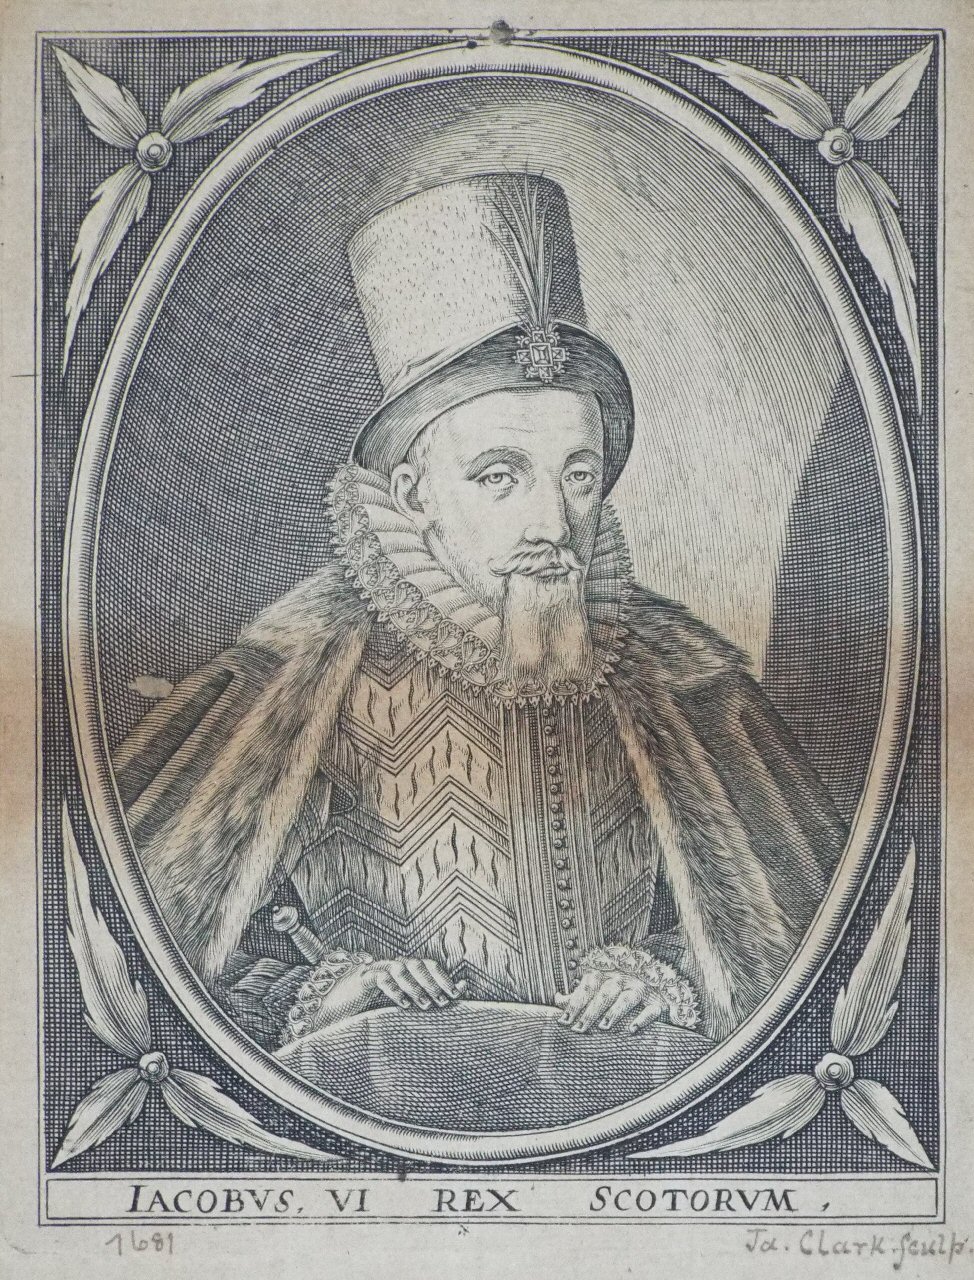 Print - Jacobus. VI Rex Scotorum.